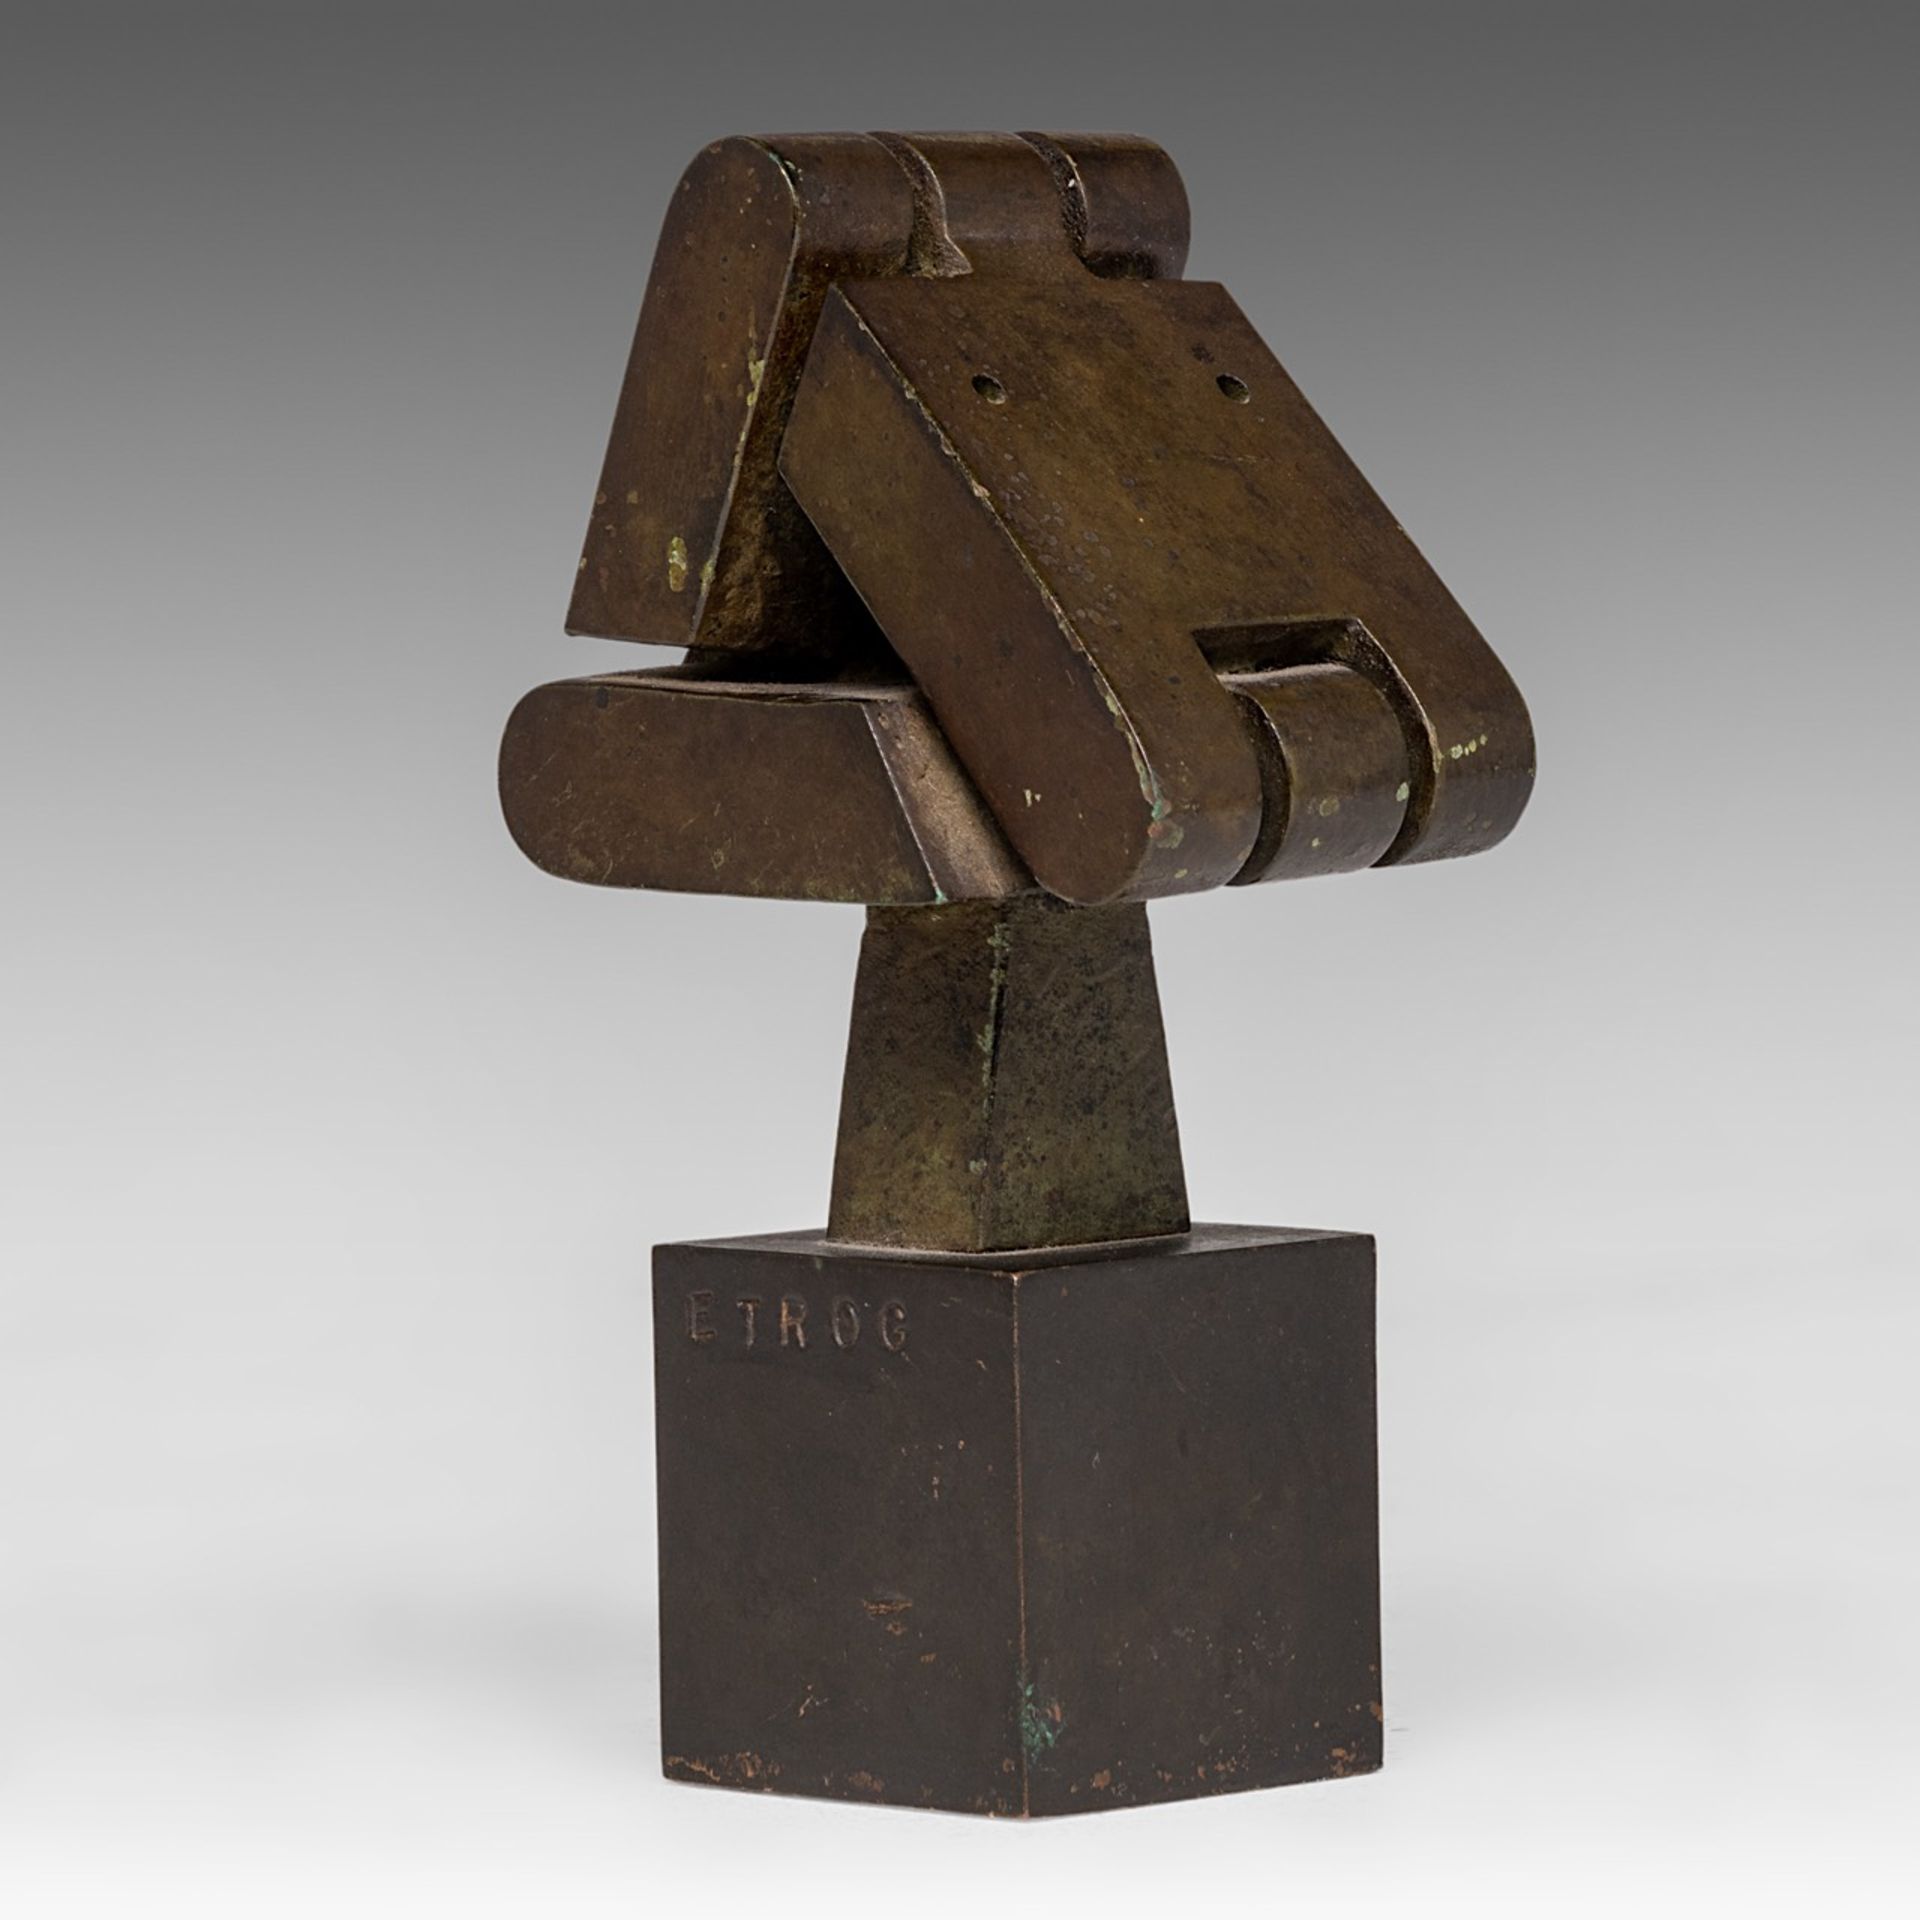 Sorel Etrog (1933-2014), untitled, patinated bronze, H 14 cm - Image 5 of 6